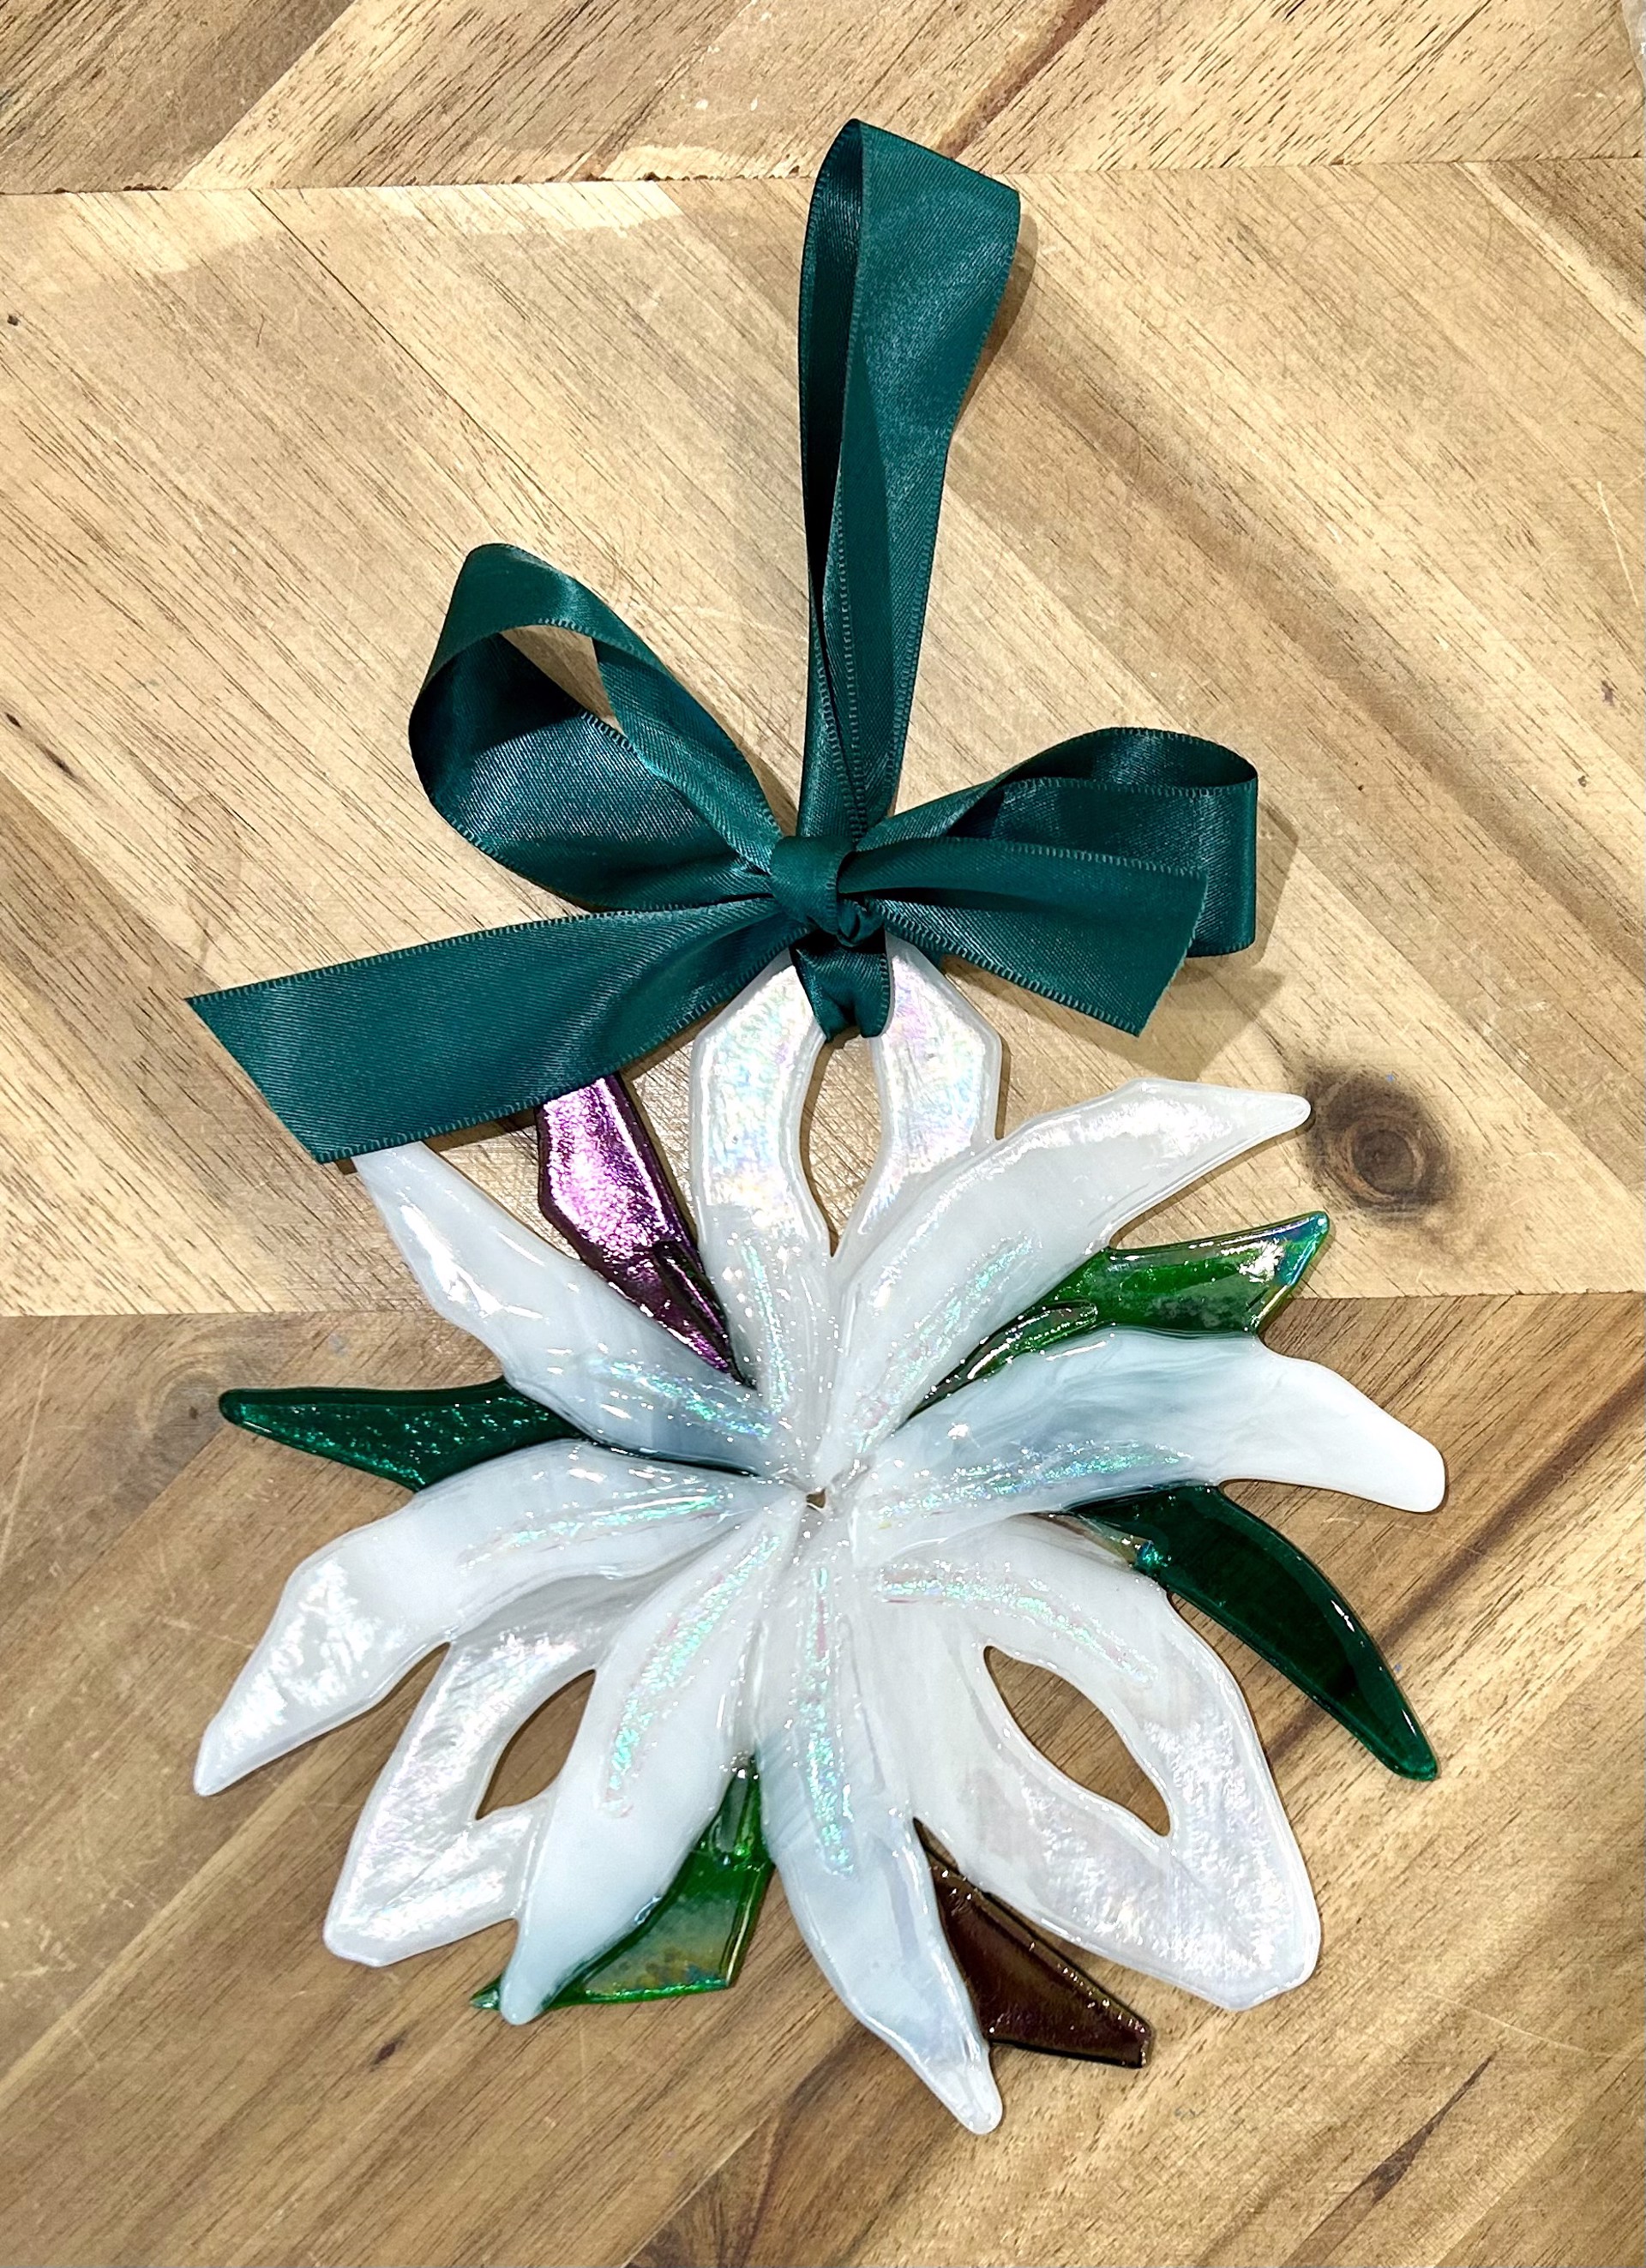 Poinsettia Ornament- #1 by Leigh Francis